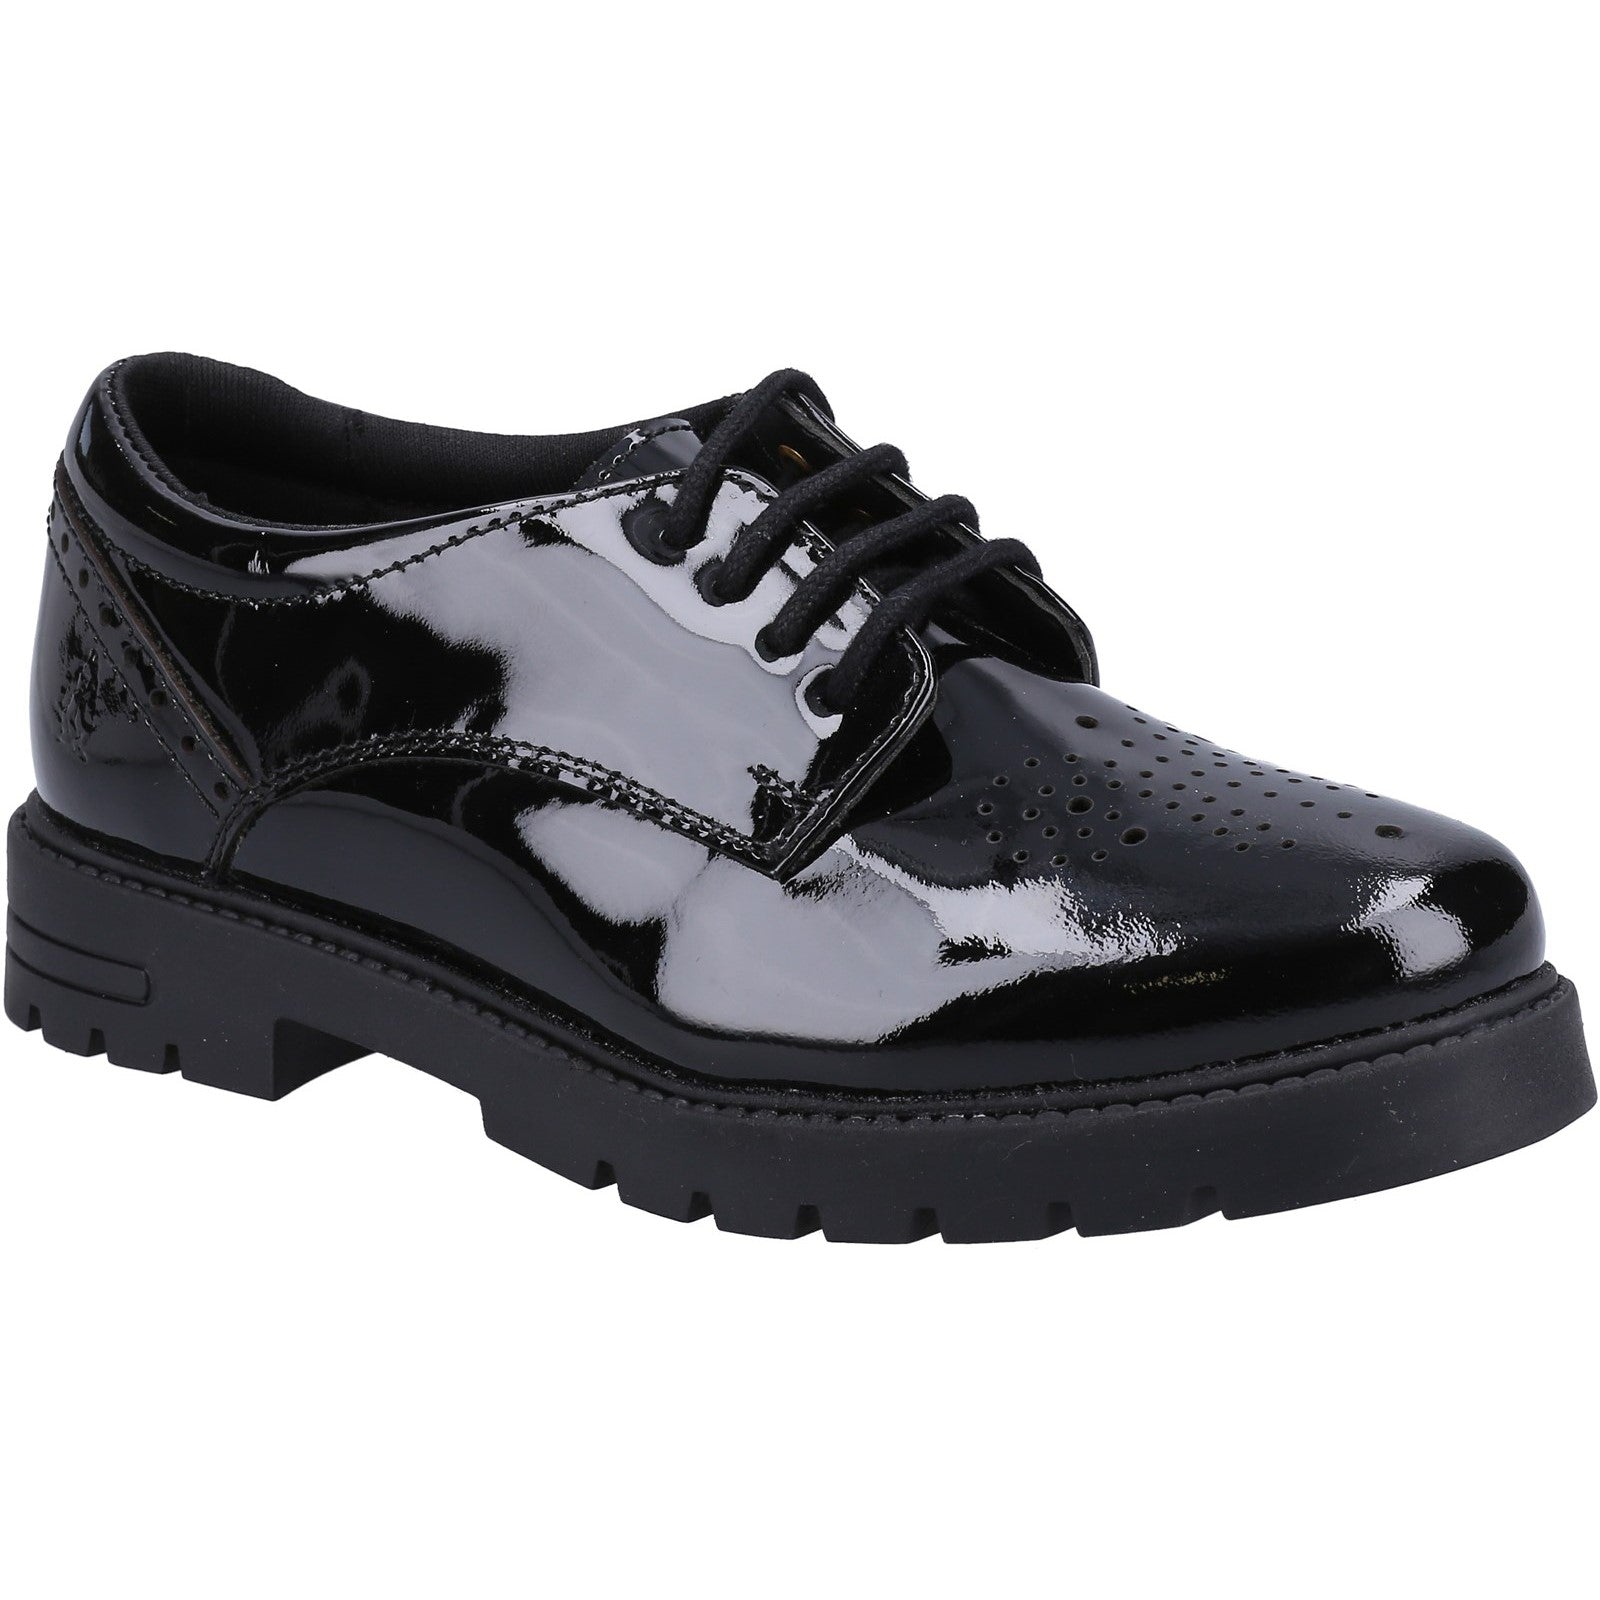 Hush Puppies Girls Jayne Patent Leather School Shoes - Black